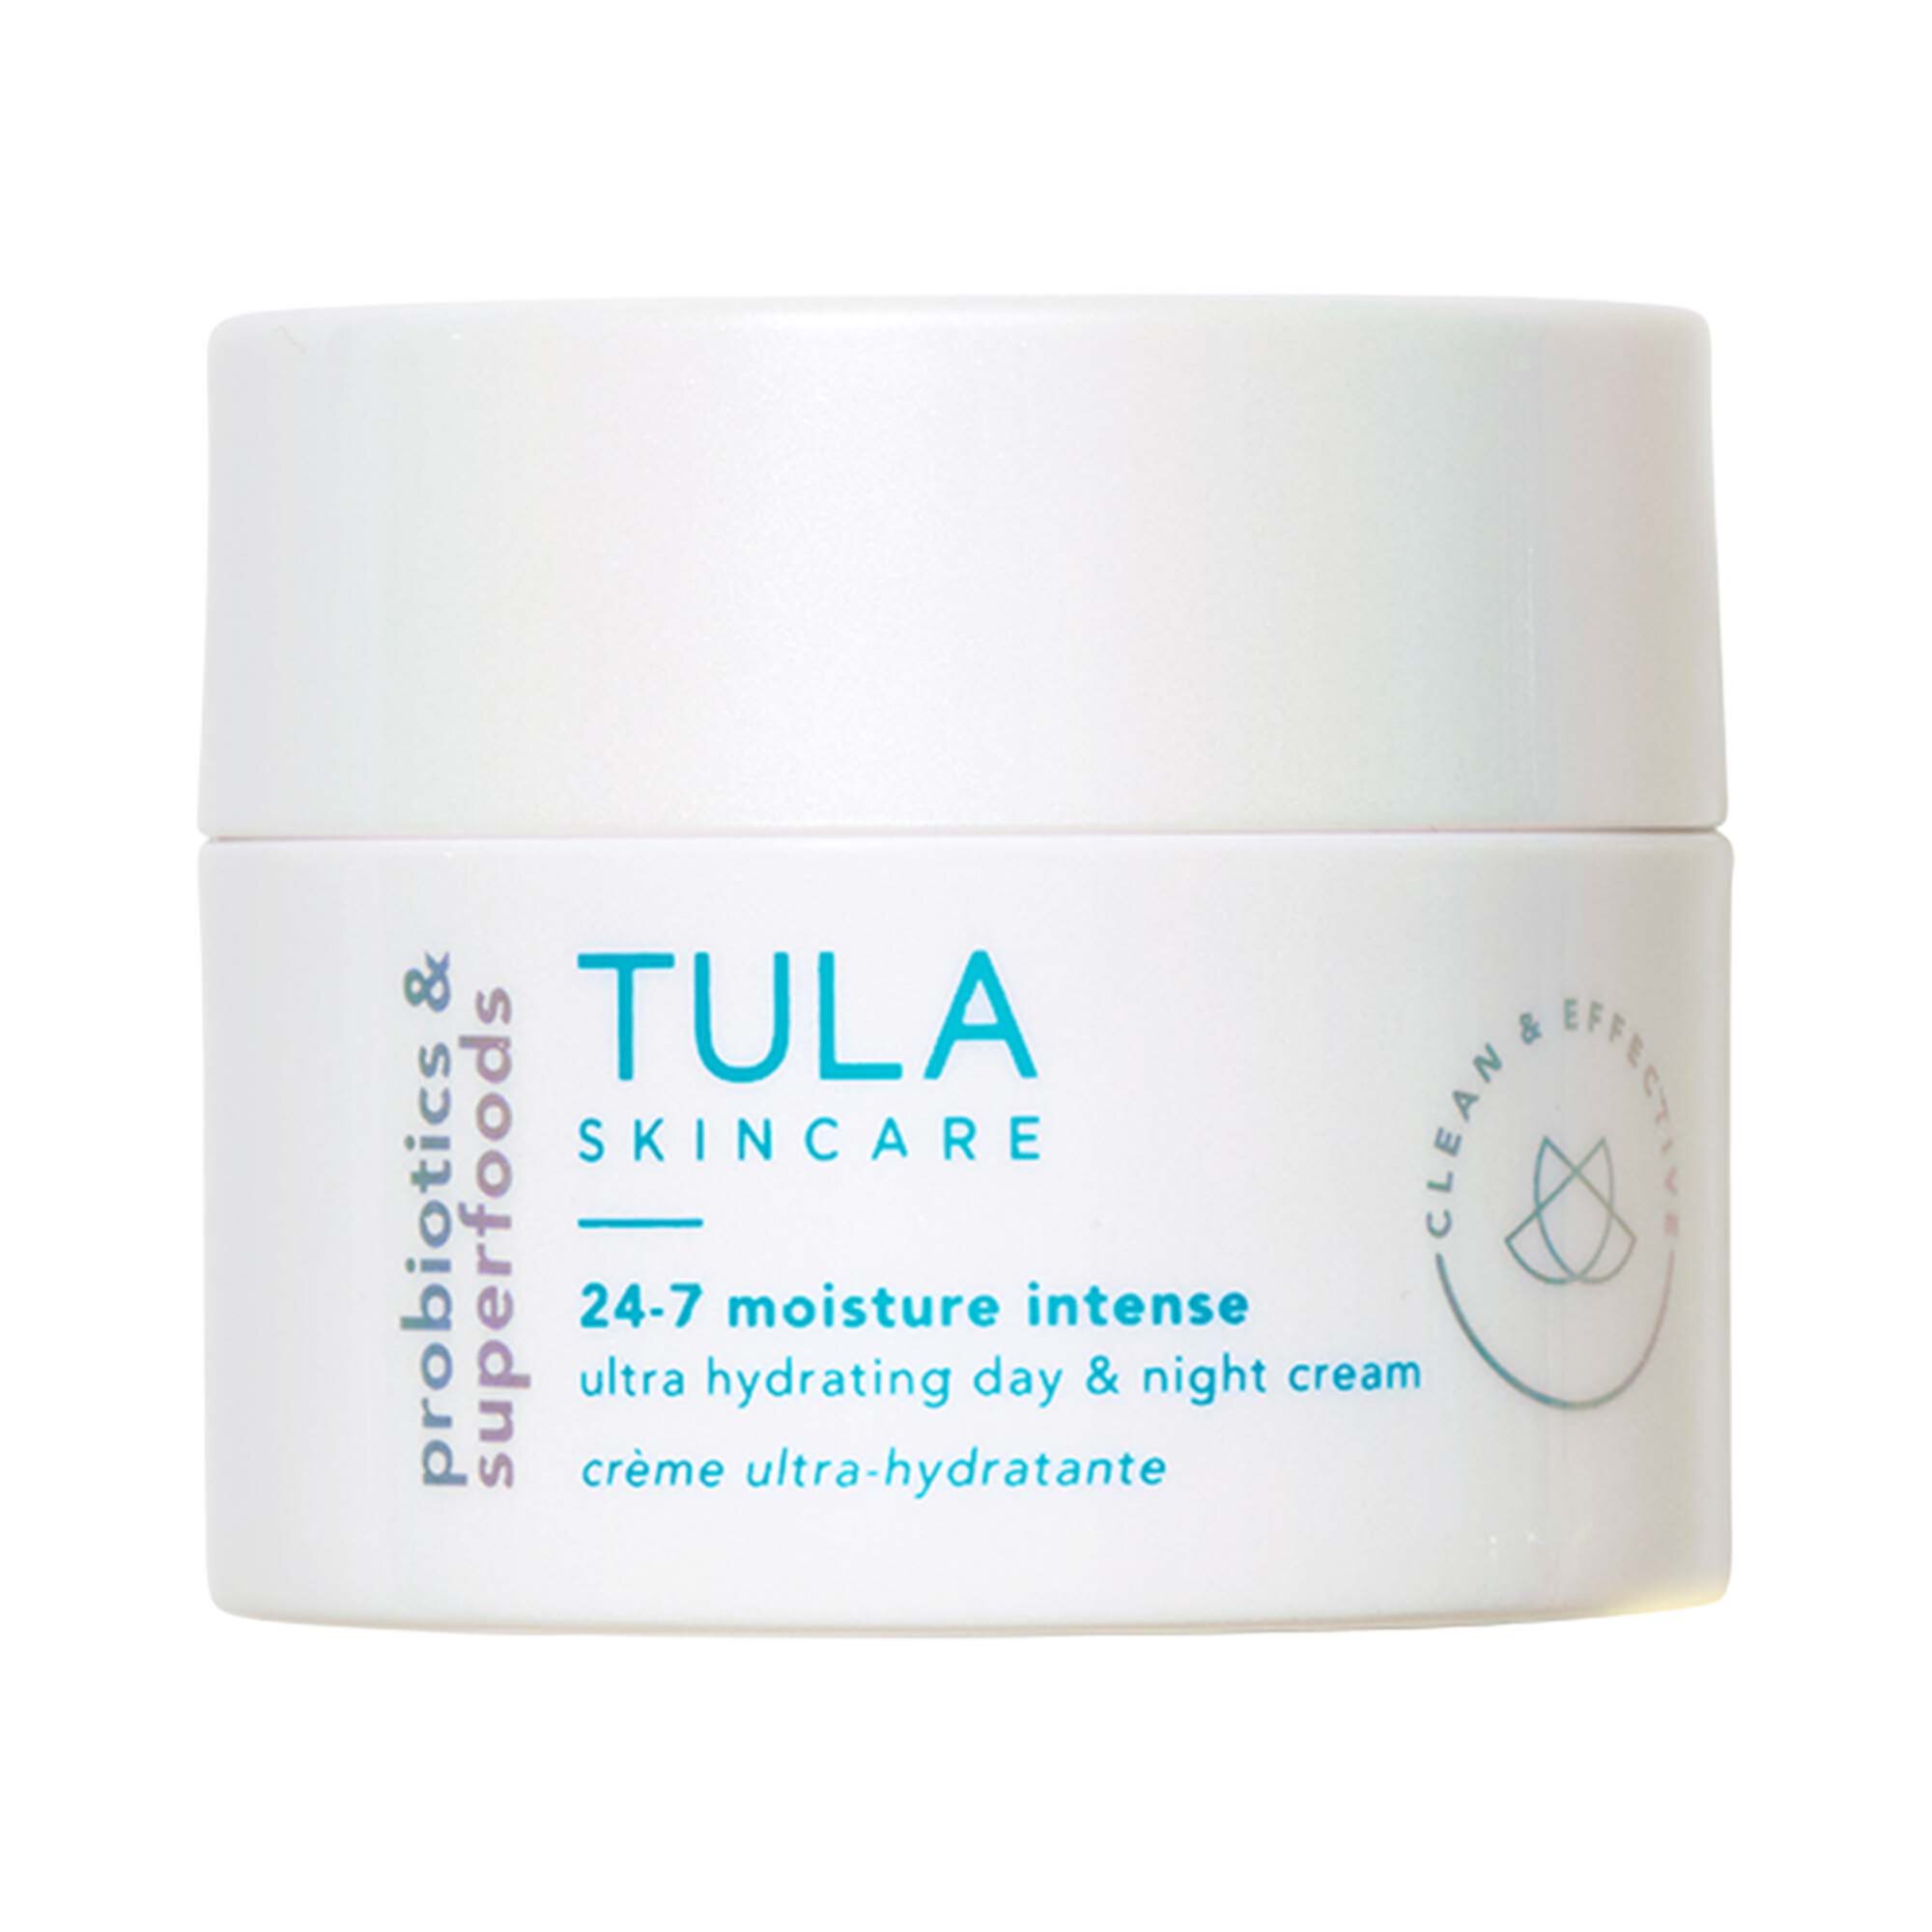 24-7 Moisture Intense Ultra Hydrating Day & Night Cream with Hyaluronic Acid + Squalane TULA Skincare